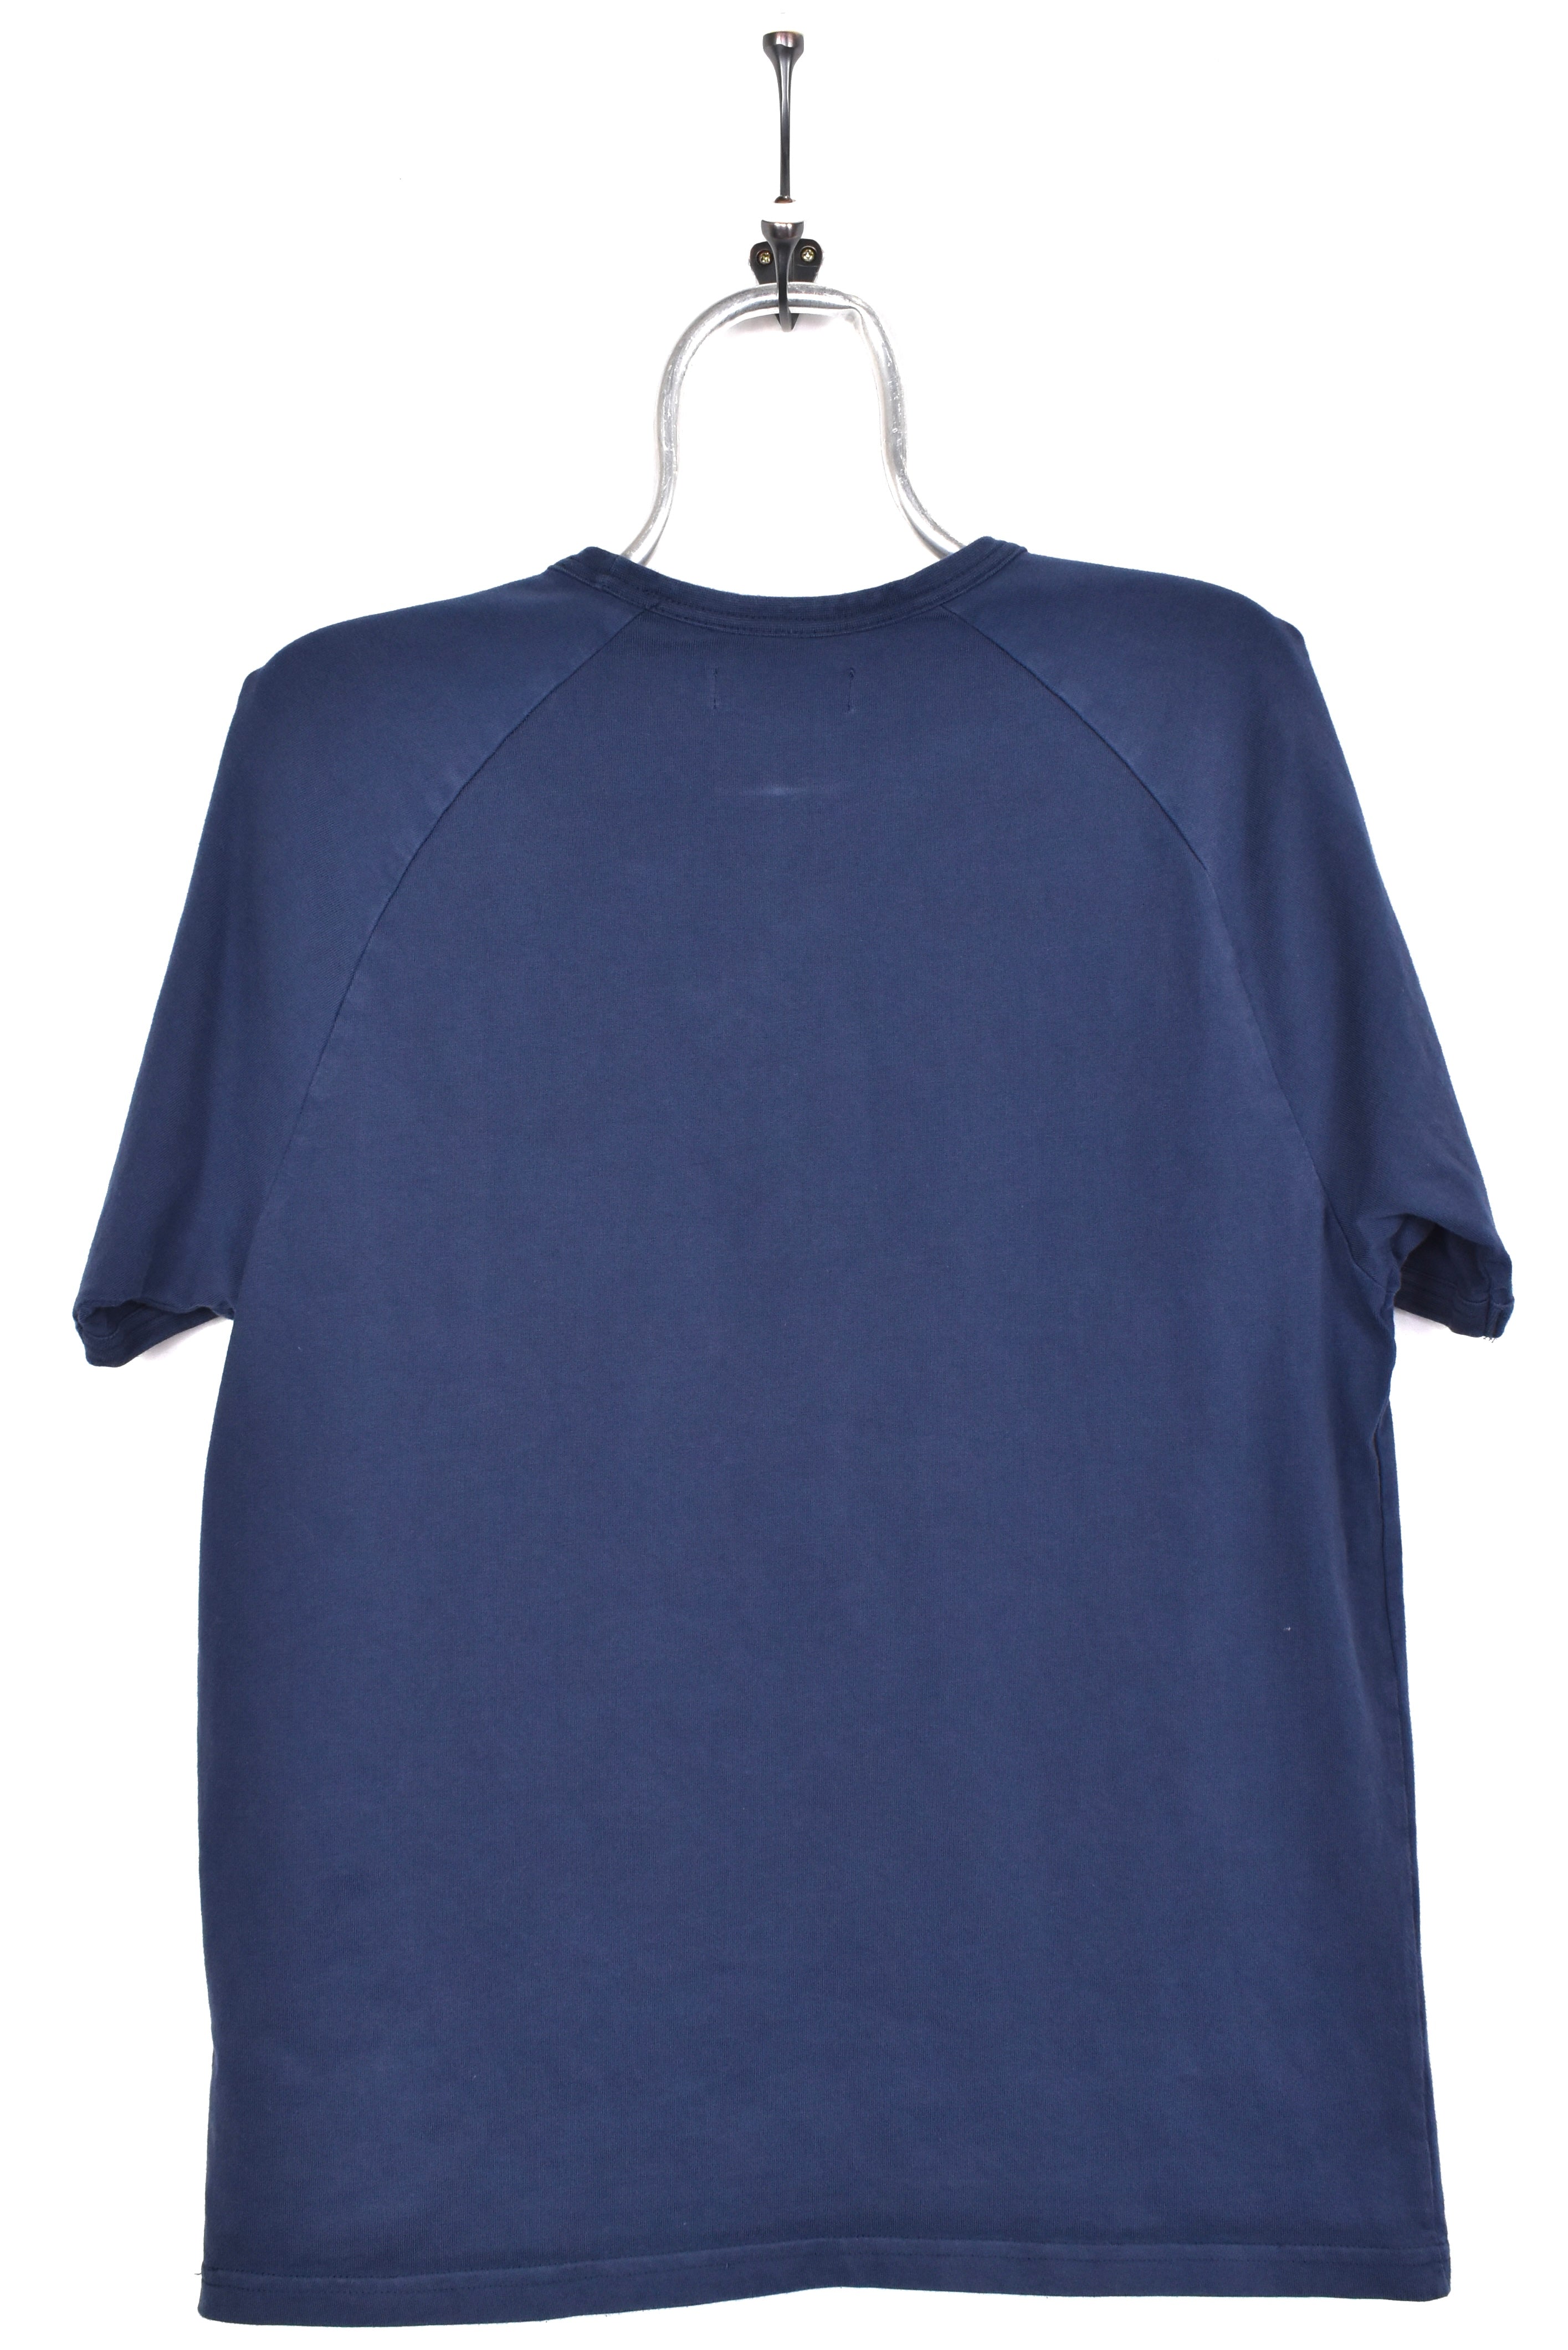 Vintage Adidas shirt, navy blue graphic tee - AU Medium ADIDAS